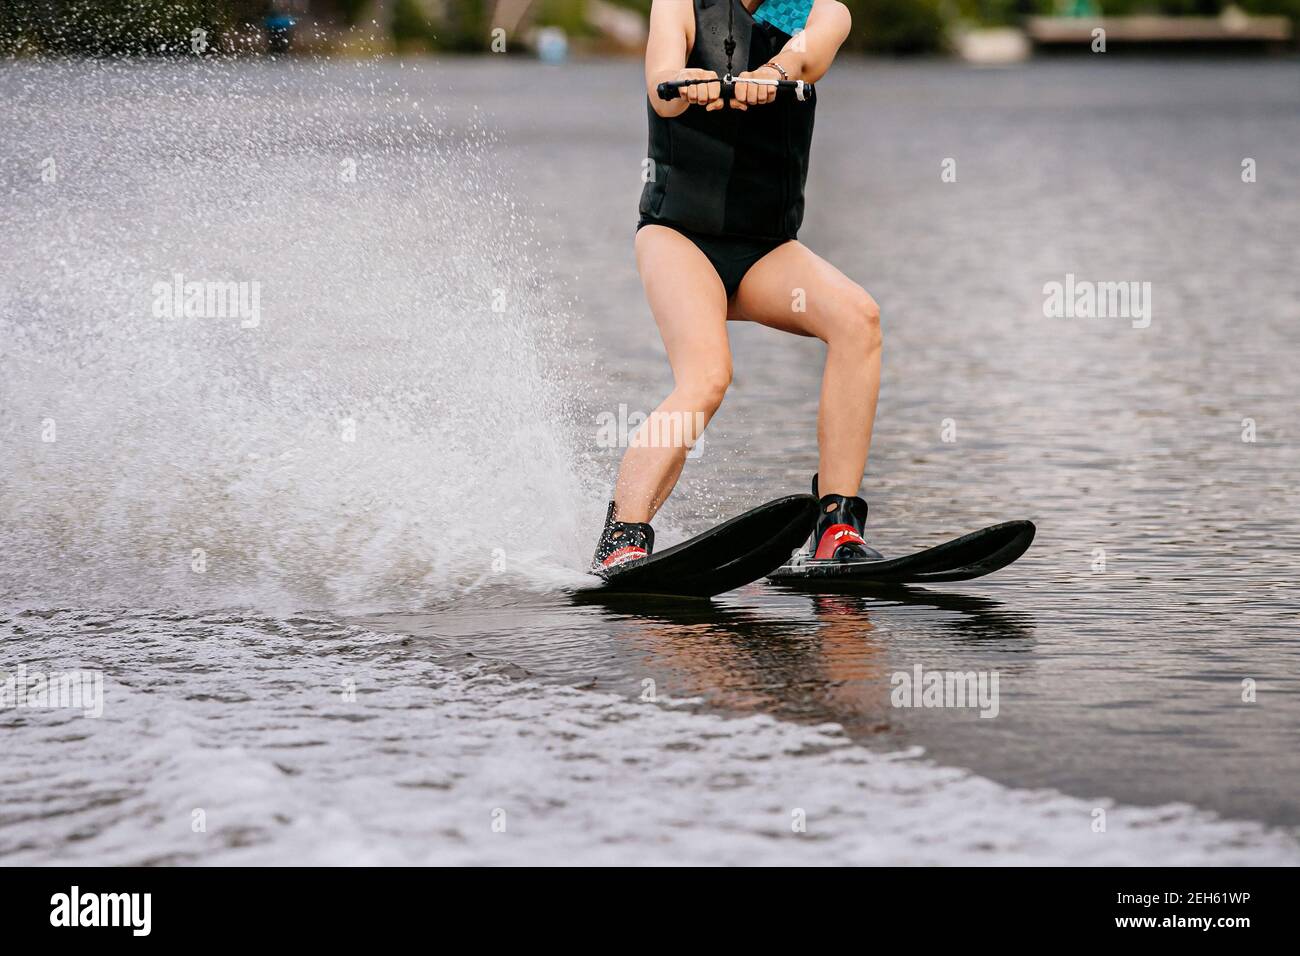 woman on water skiing in summer lake Stock Photo